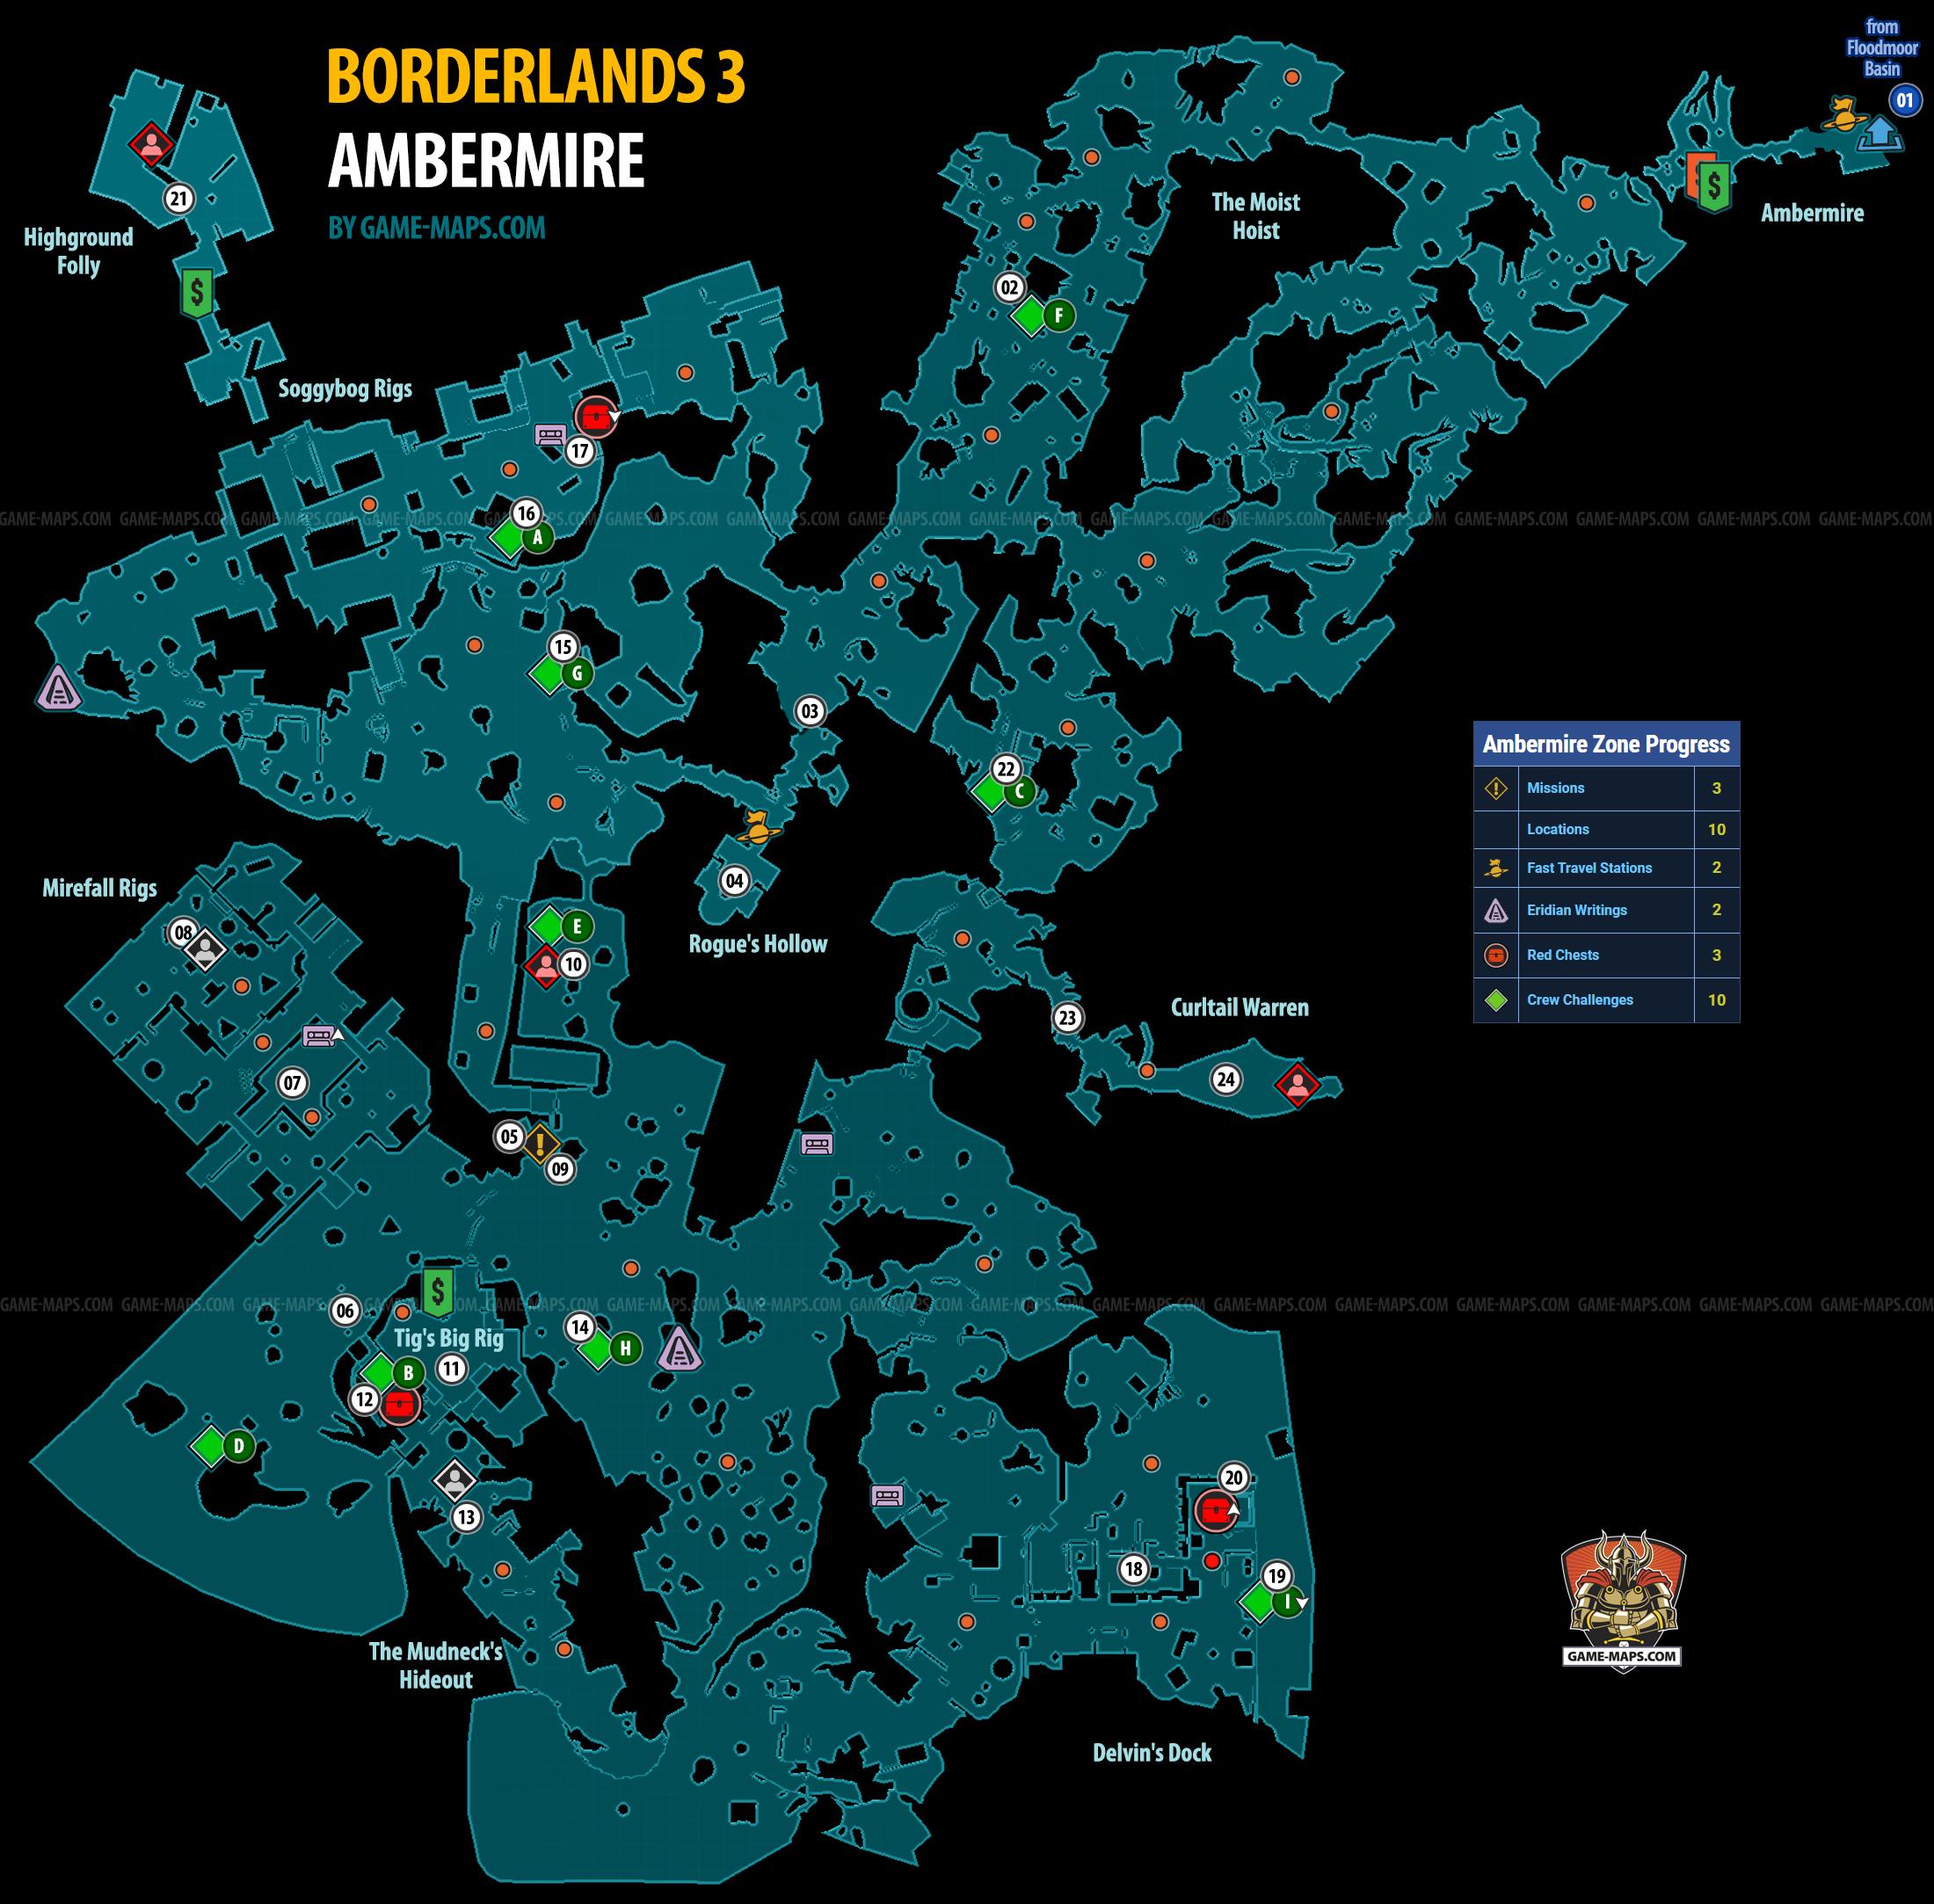 Ambermire Map on Eden-6 Planet for Borderlands 3